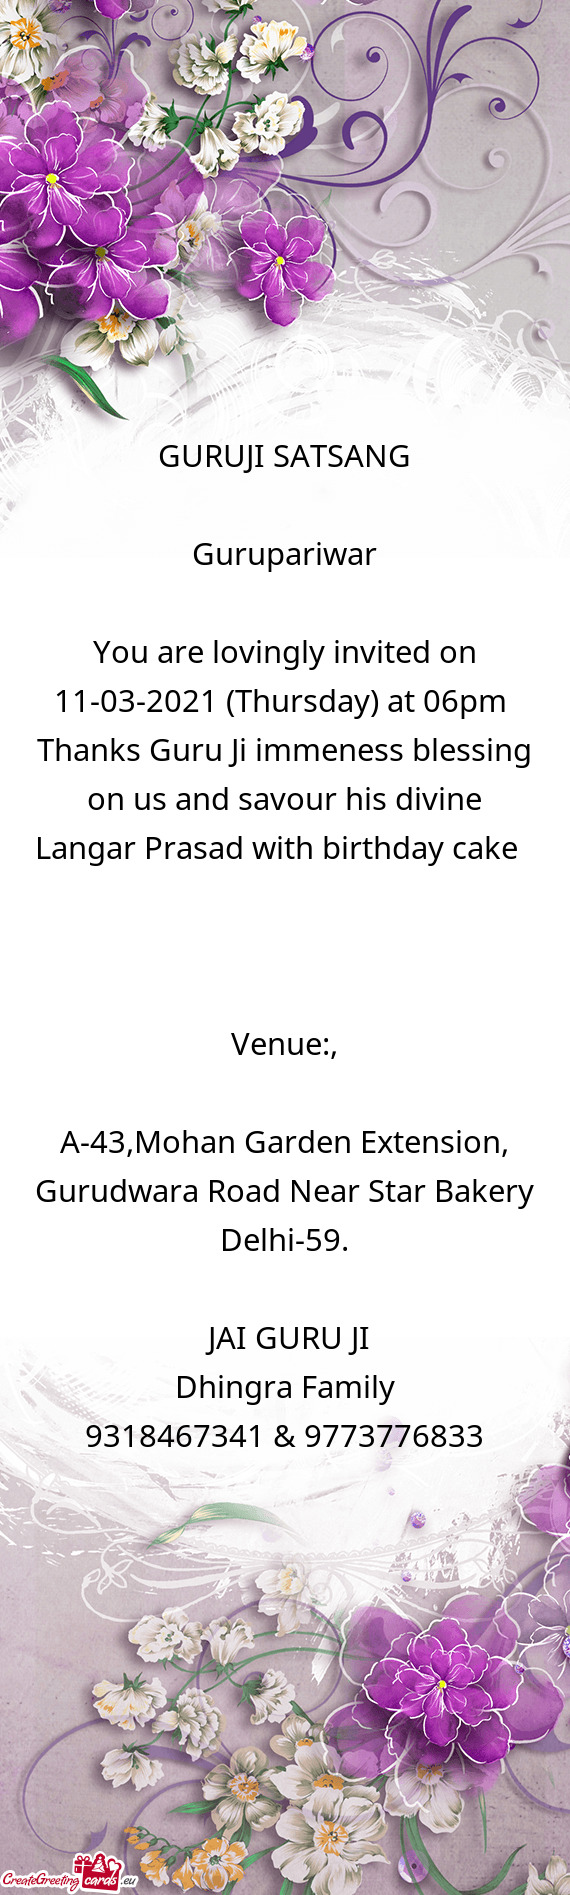 A-43,Mohan Garden Extension, Gurudwara Road Near Star Bakery Delhi-59